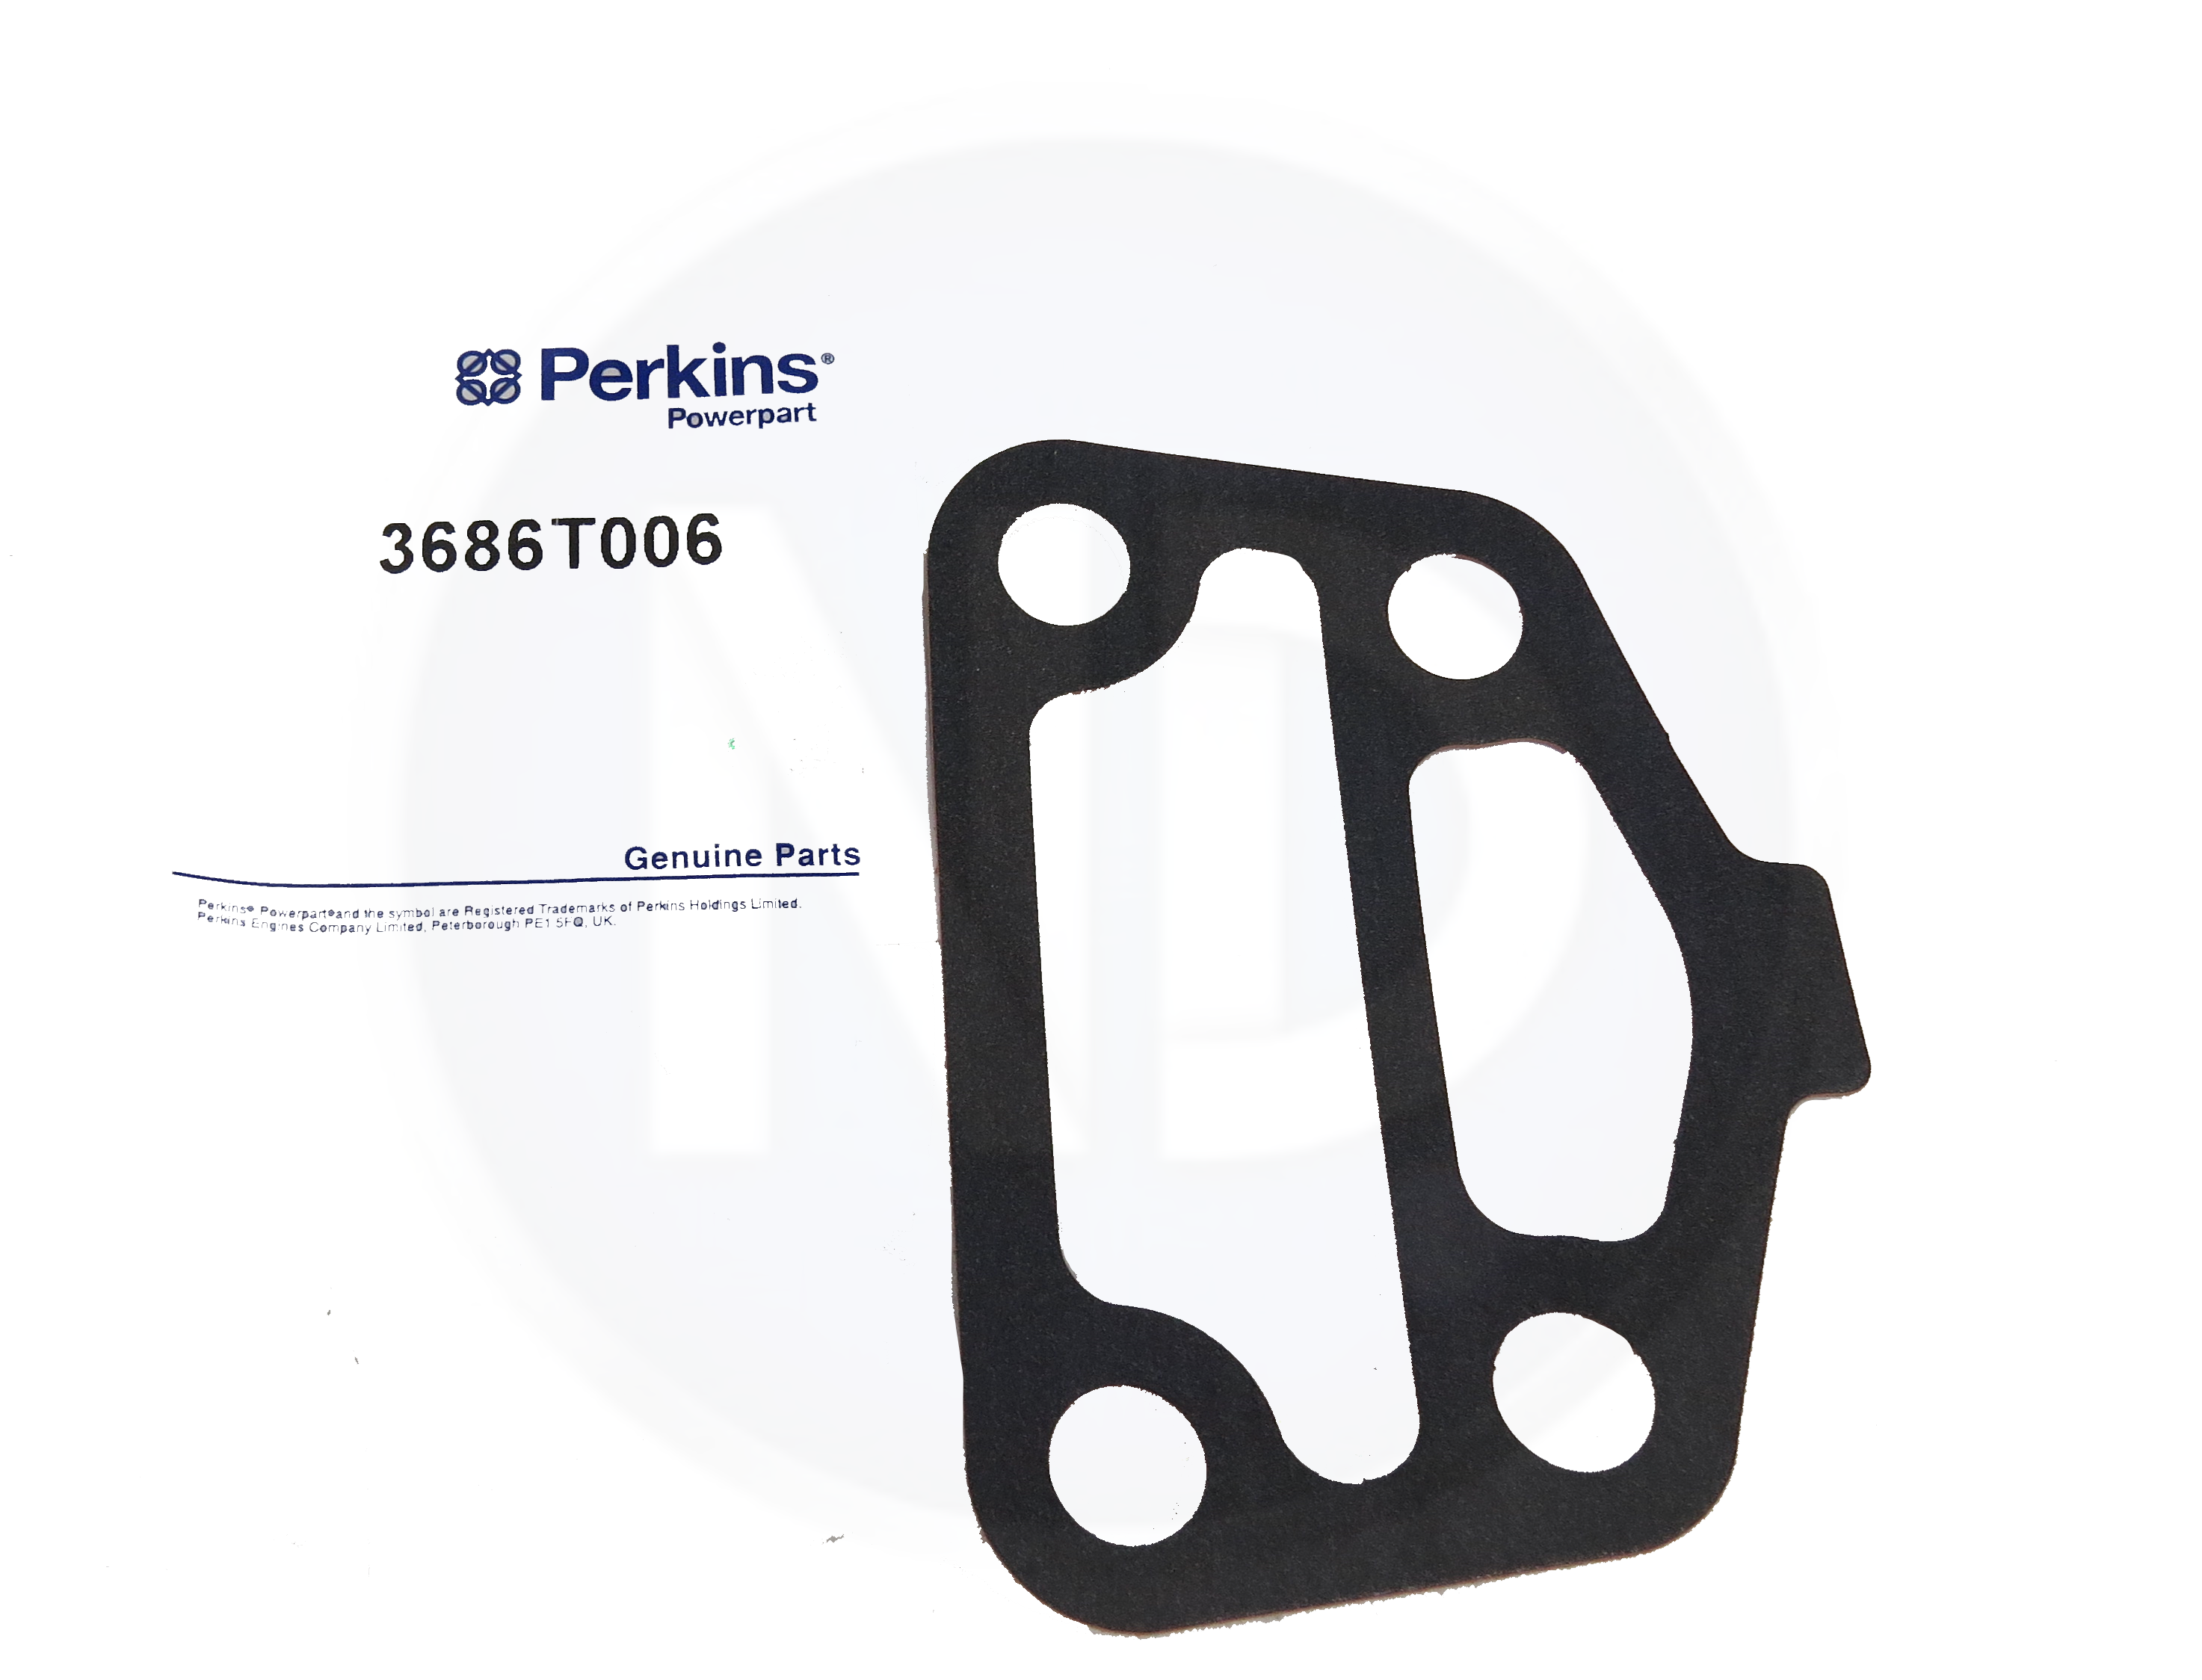 3686T006 Perkins Oil Filter Head Gasket